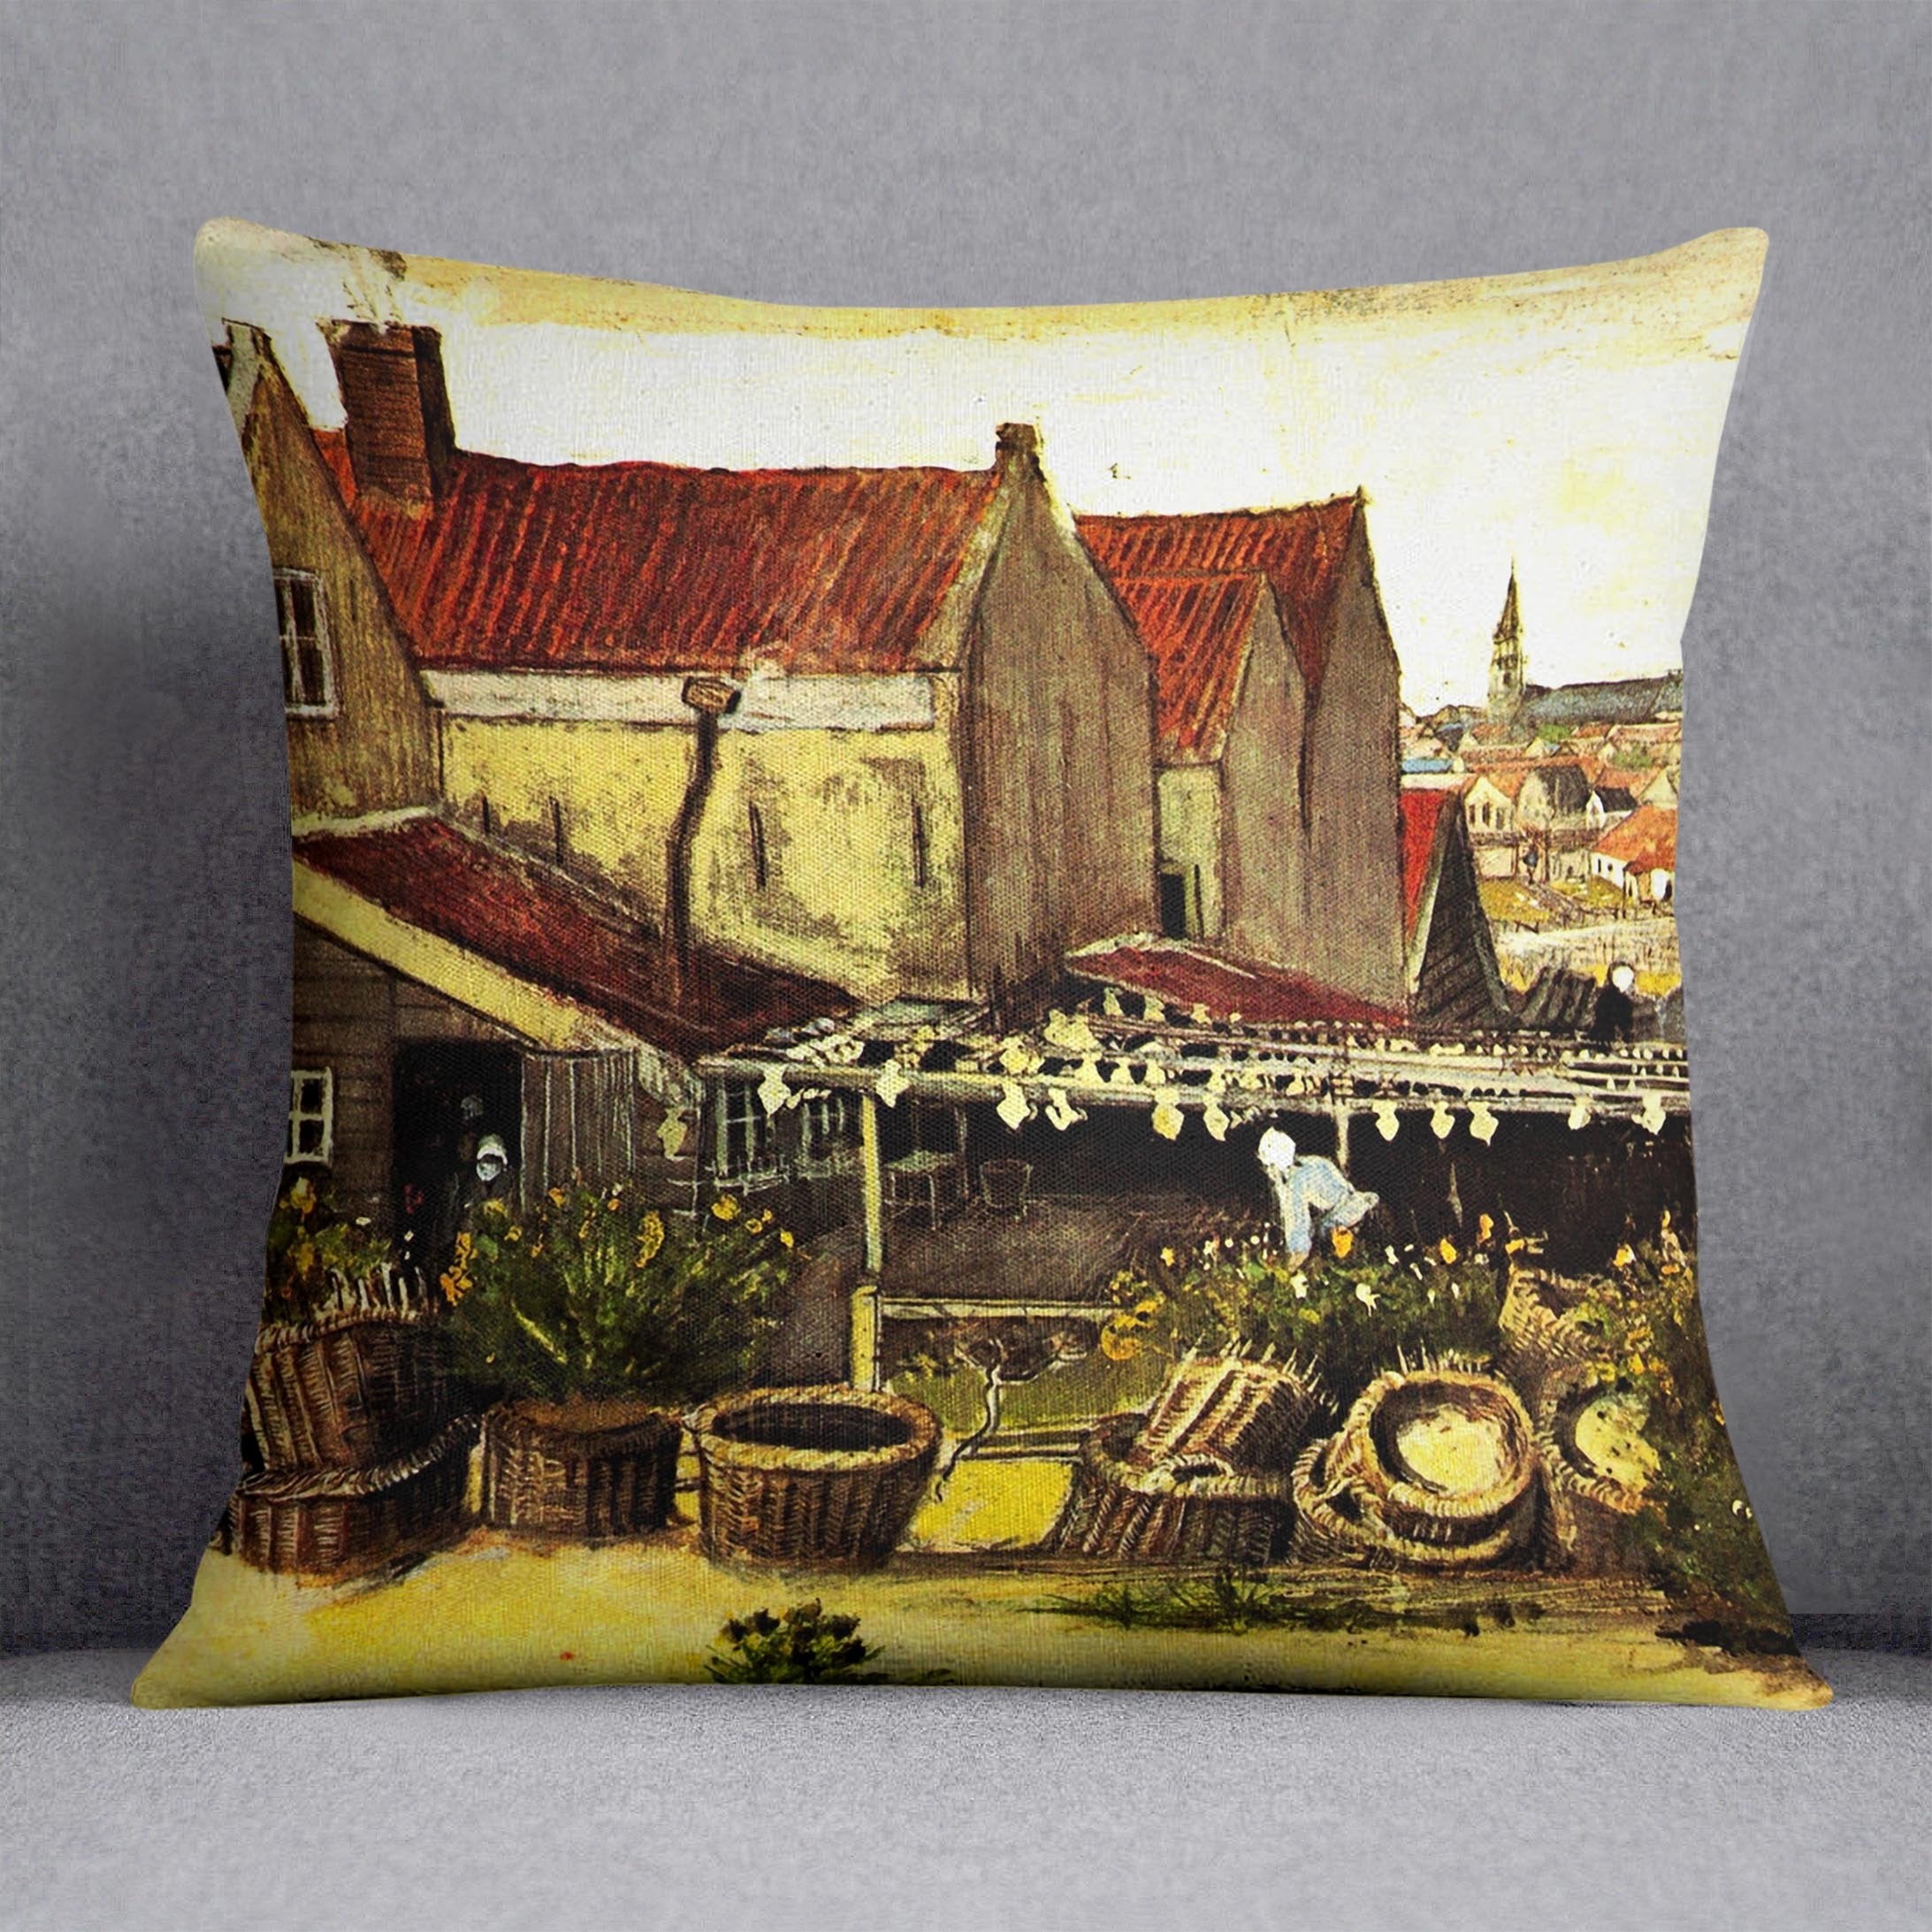 Fish-Drying Barn by Van Gogh Throw Pillow